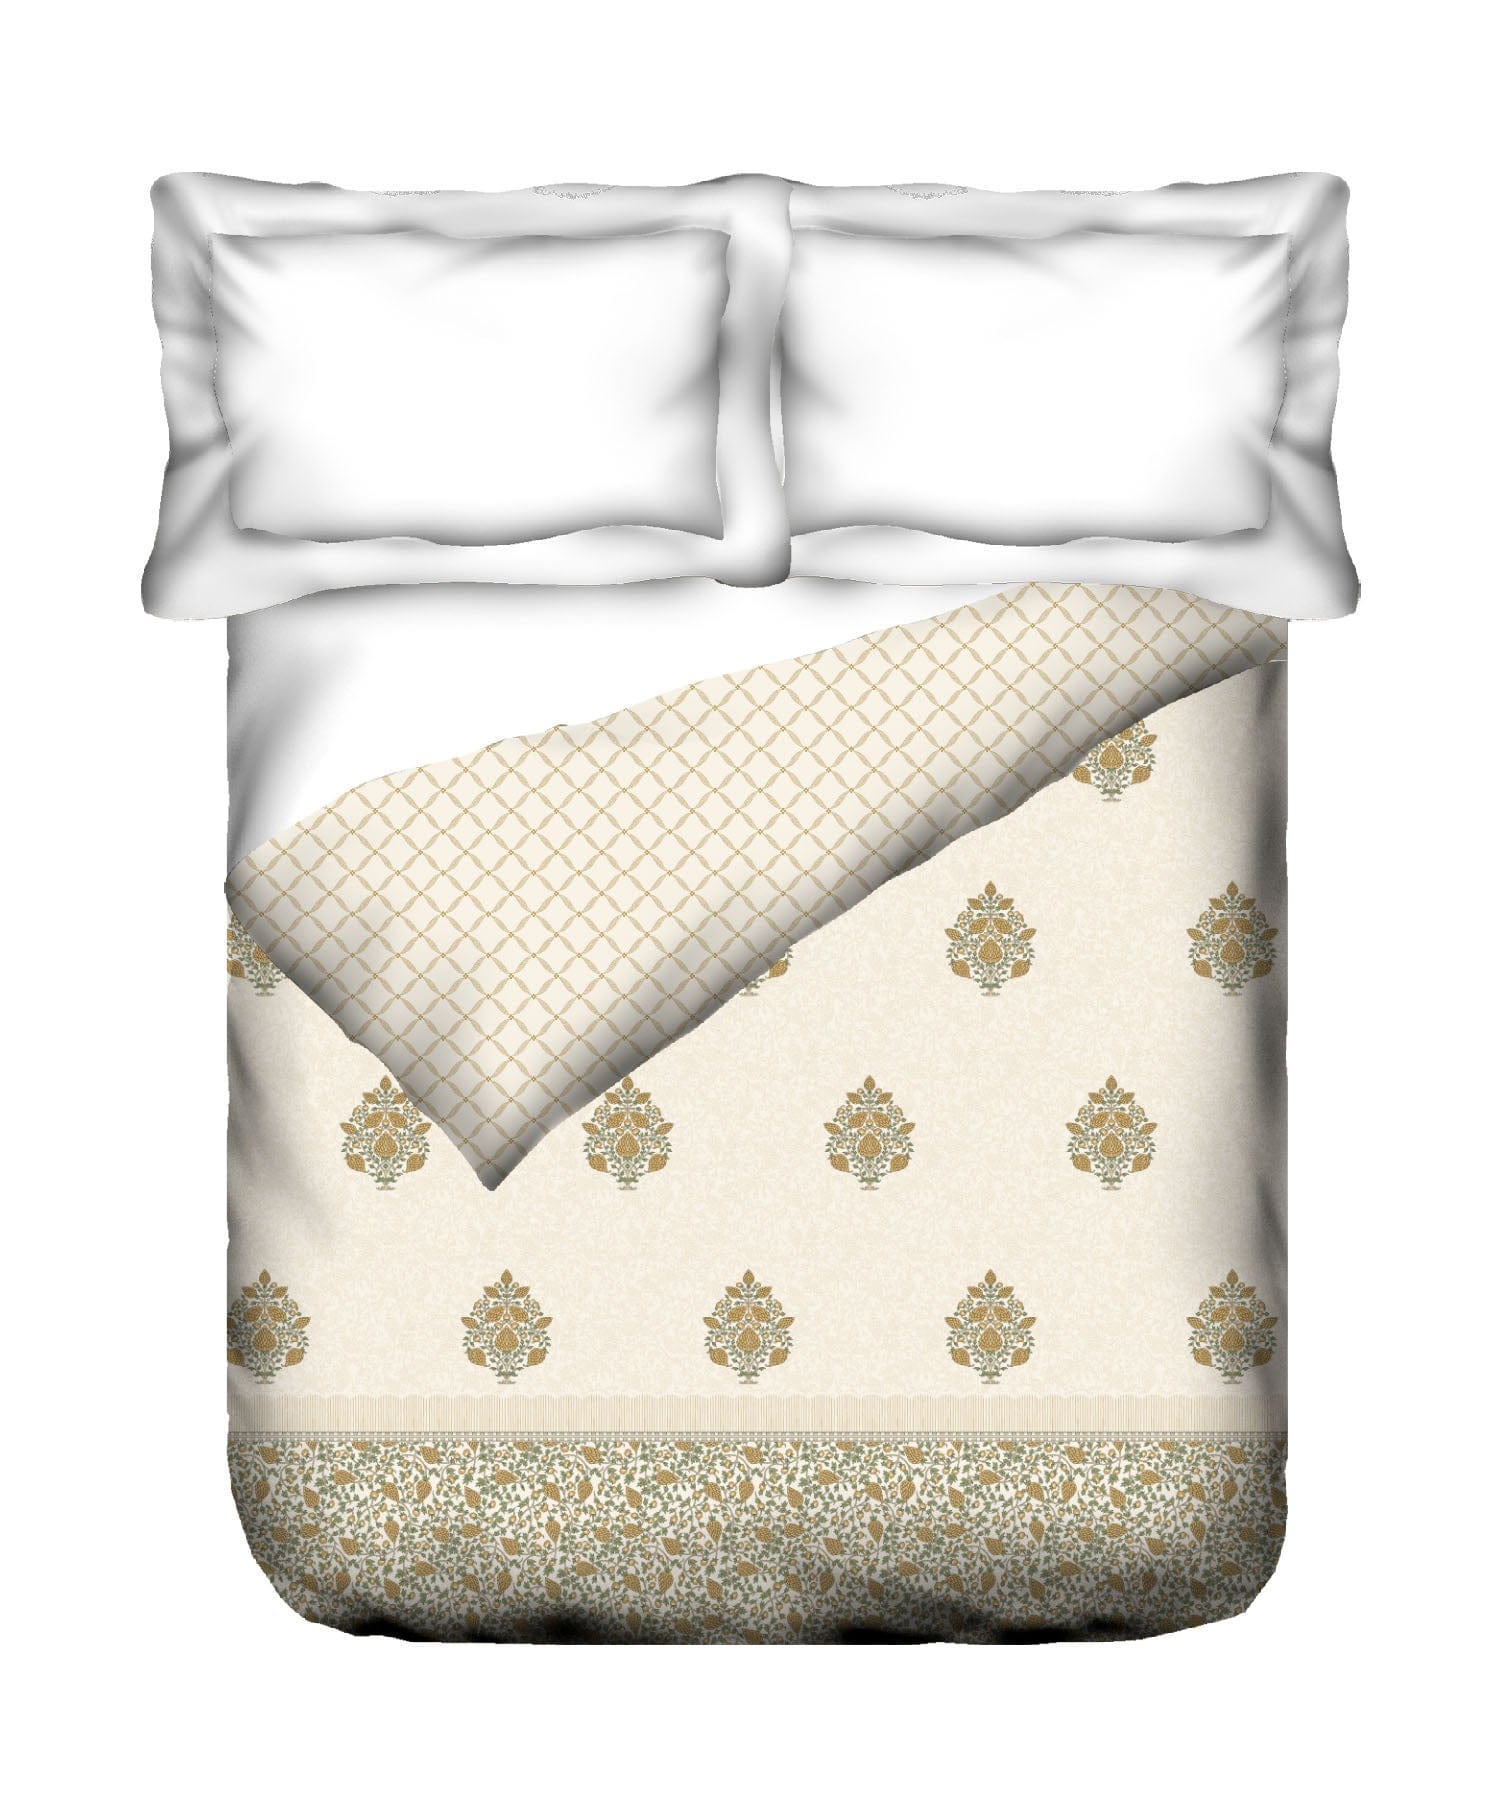 King Size Comforter ₹3999/-